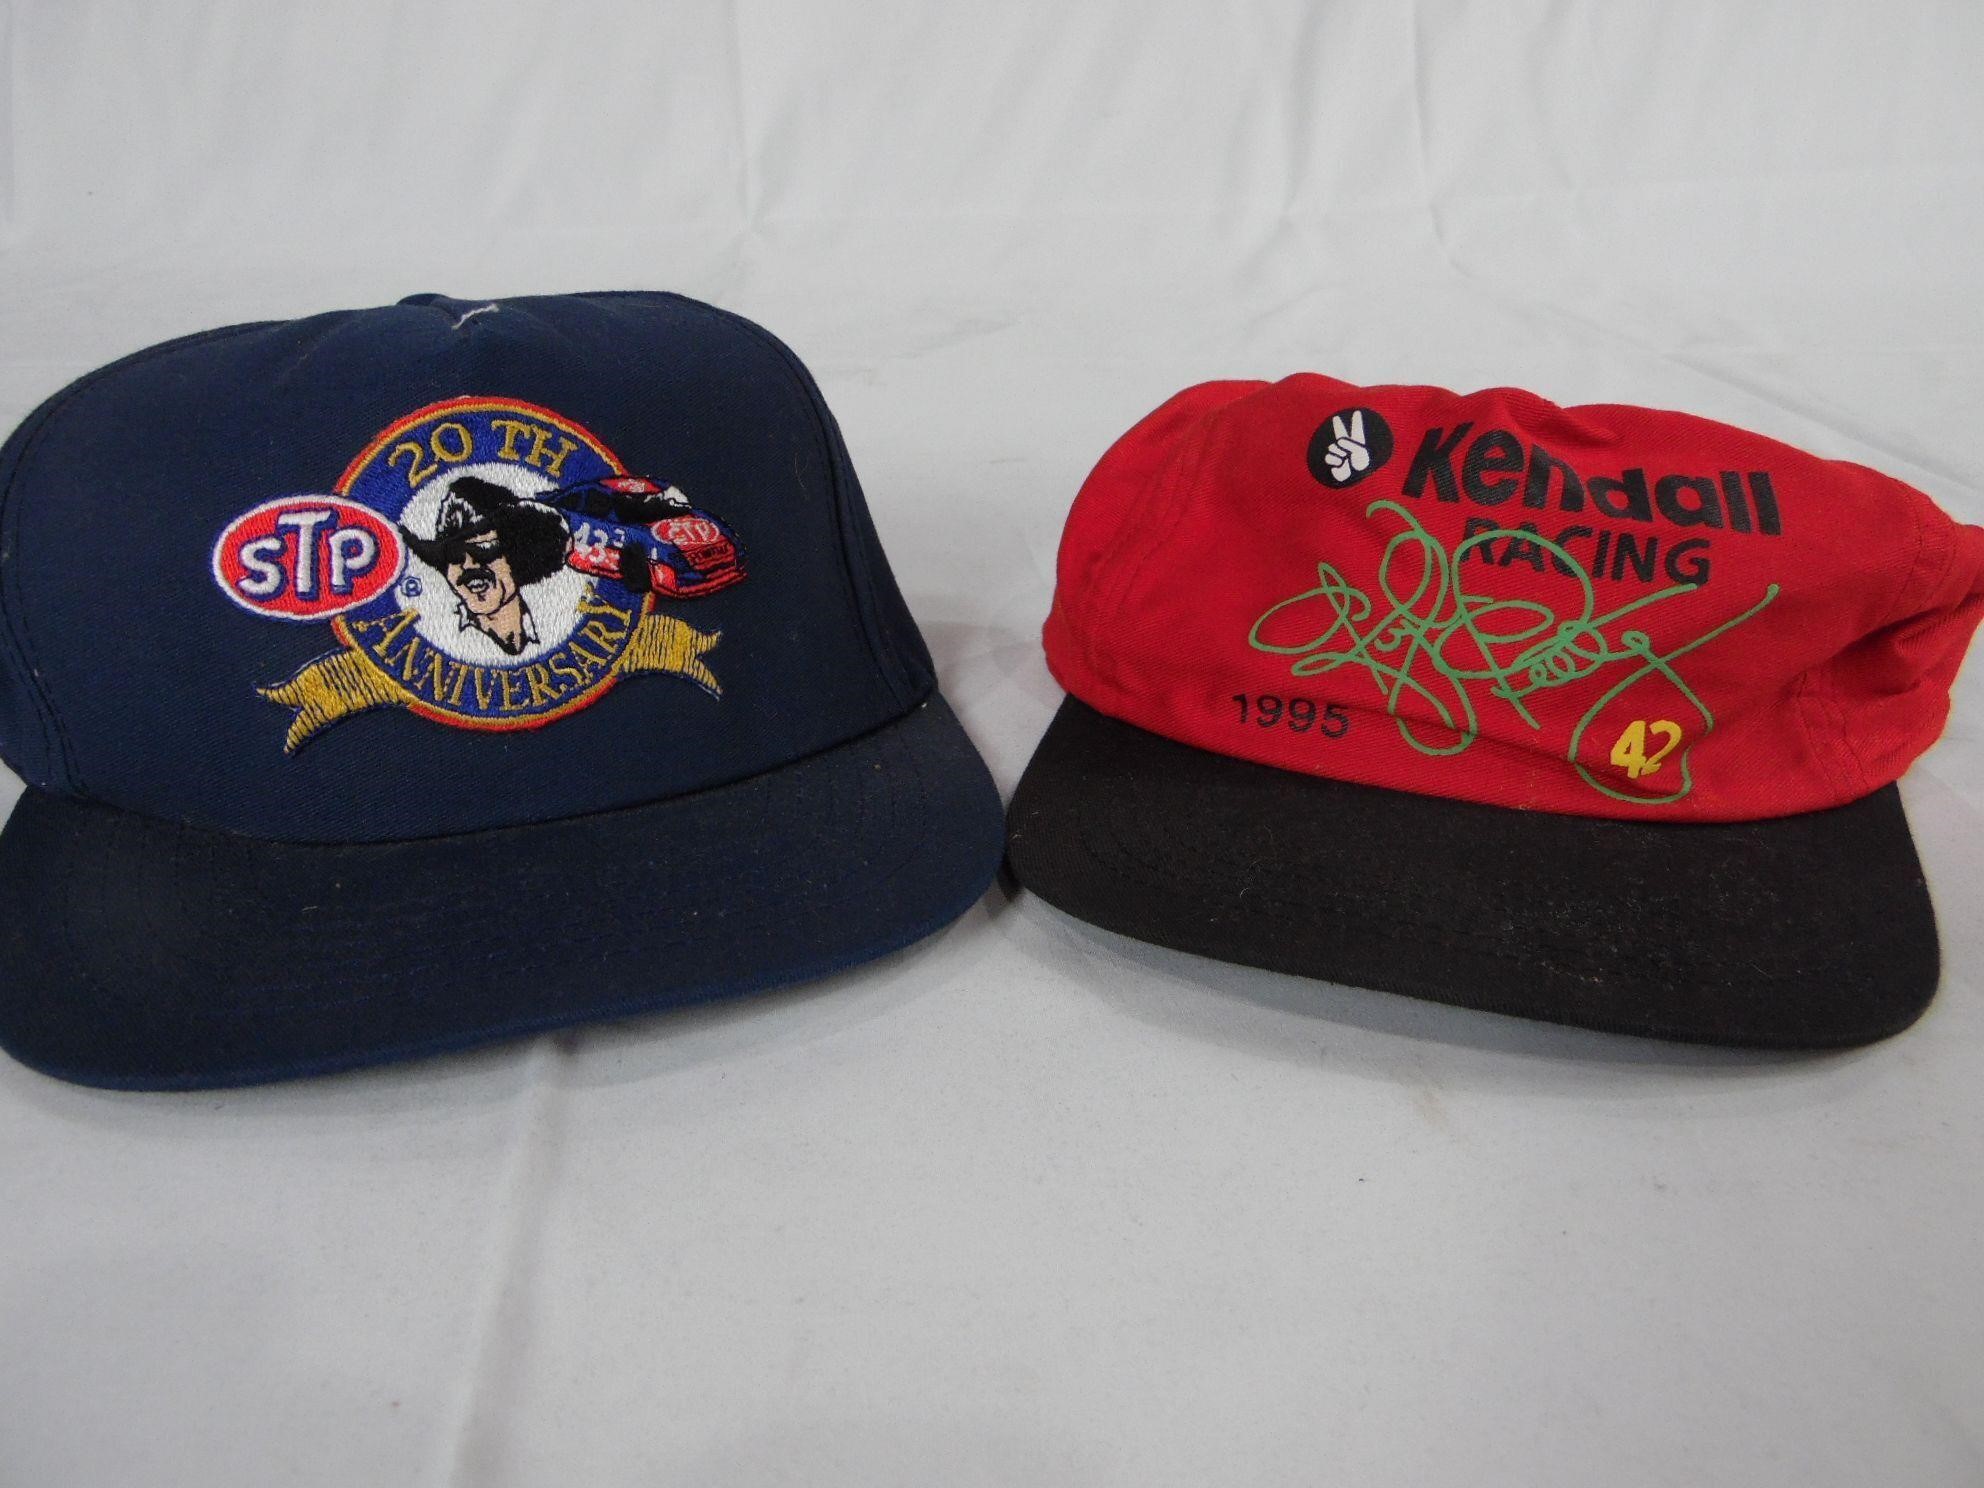 Richard and Kyle Petty Vintage Racing Hats